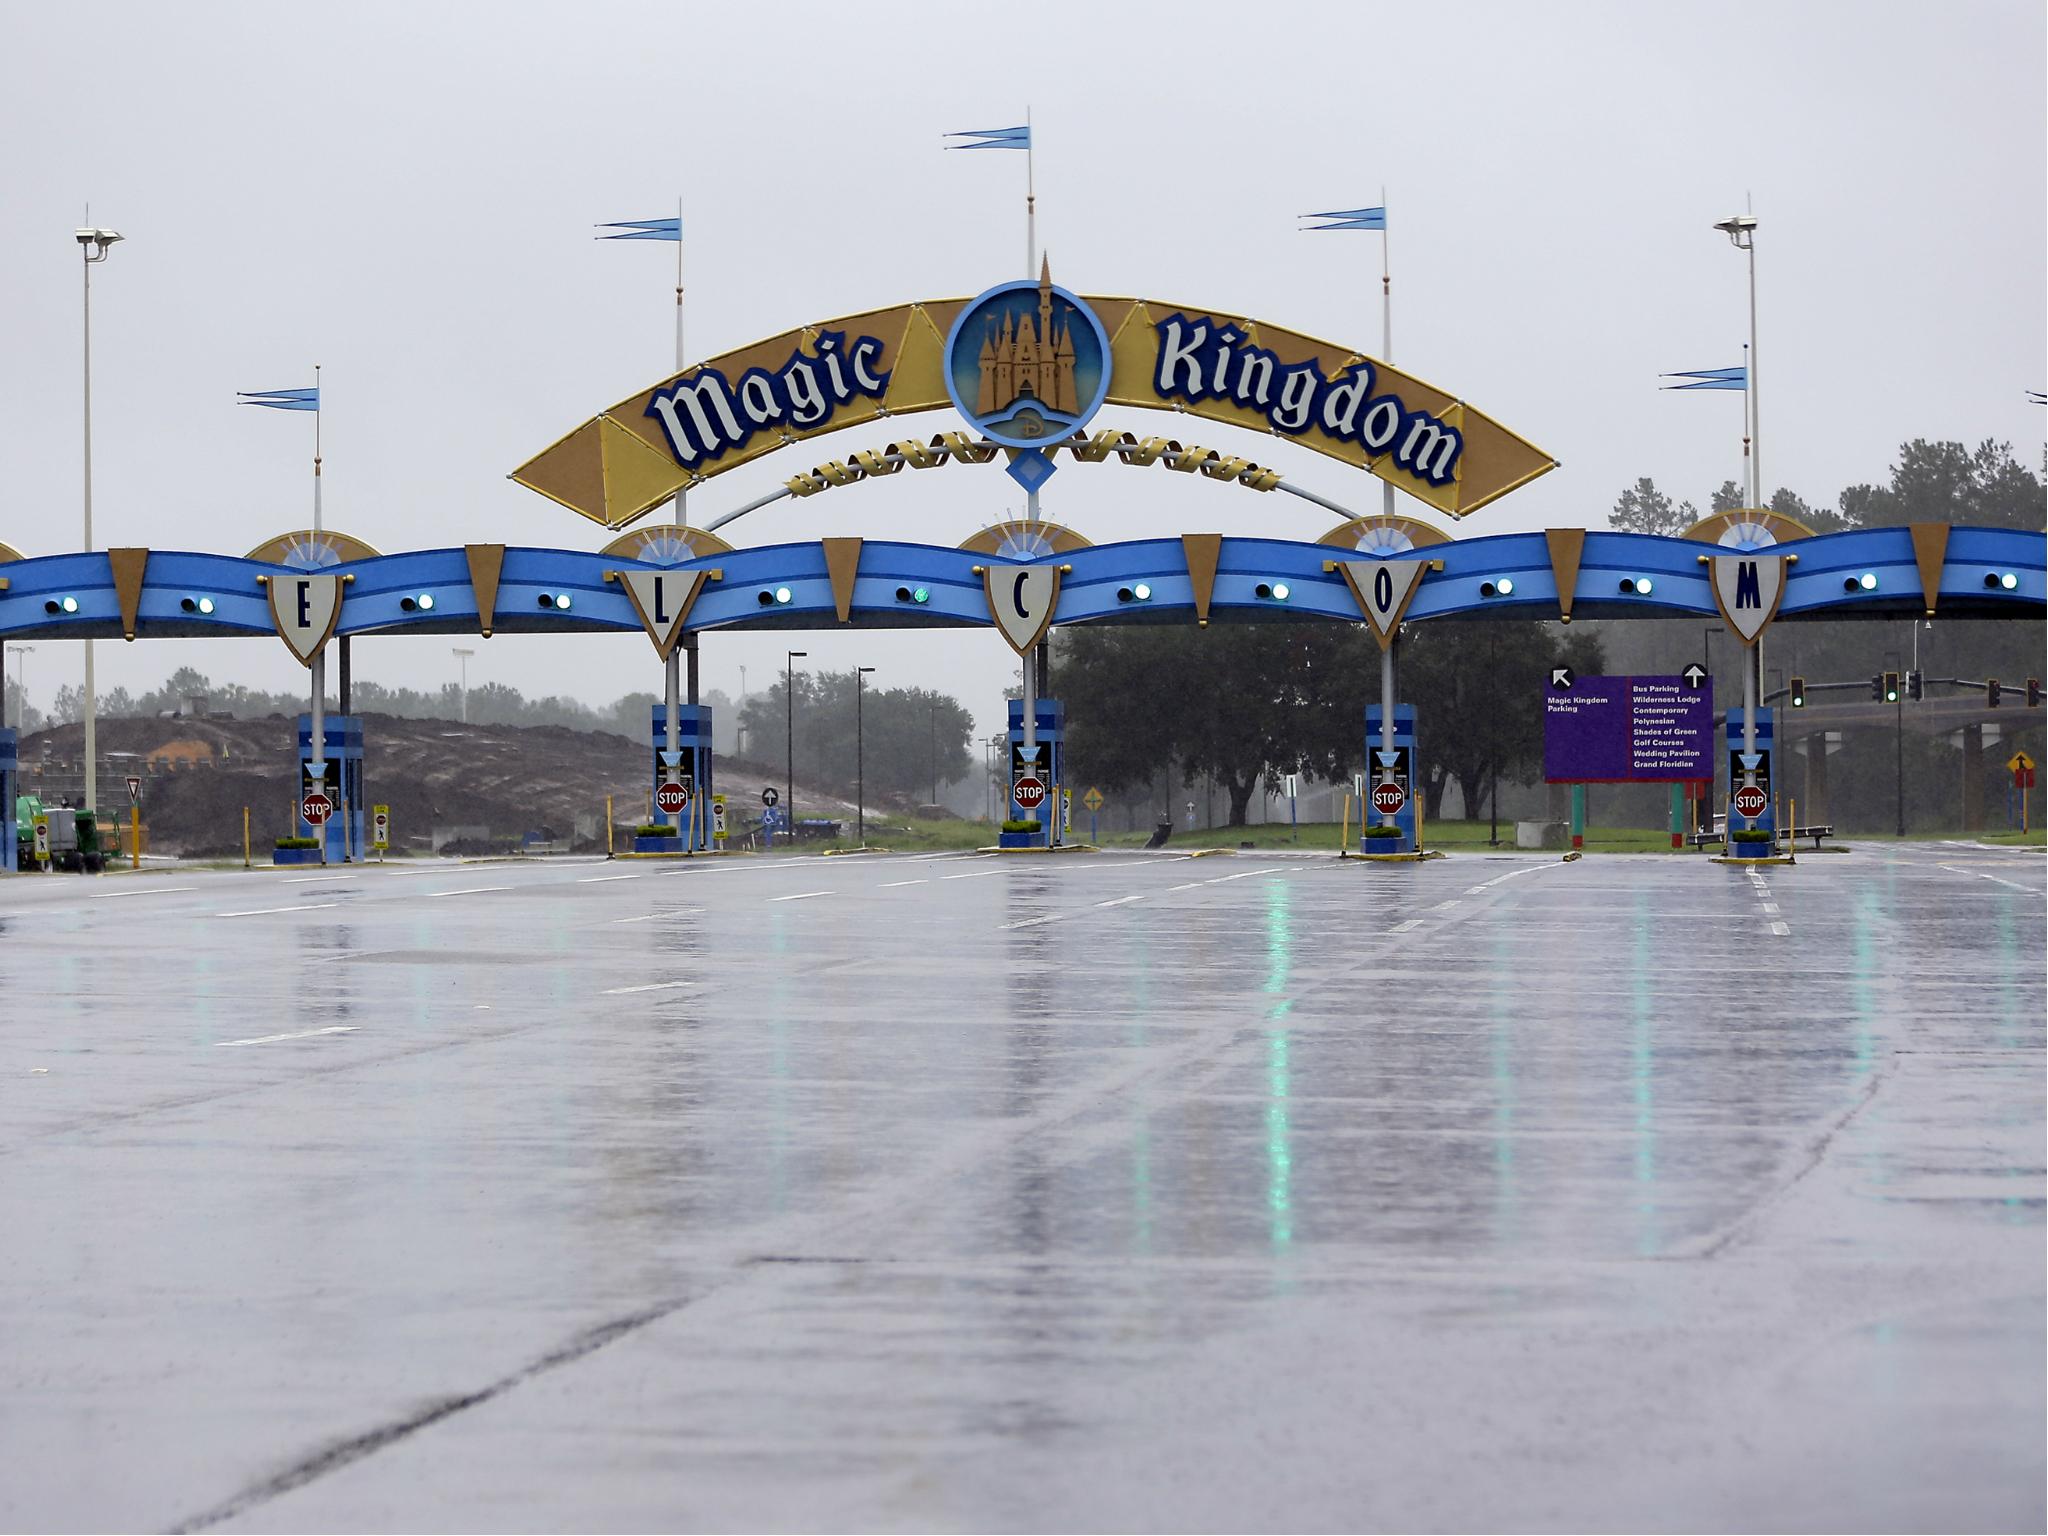 The entrance to the Magic Kingdom at Disney World